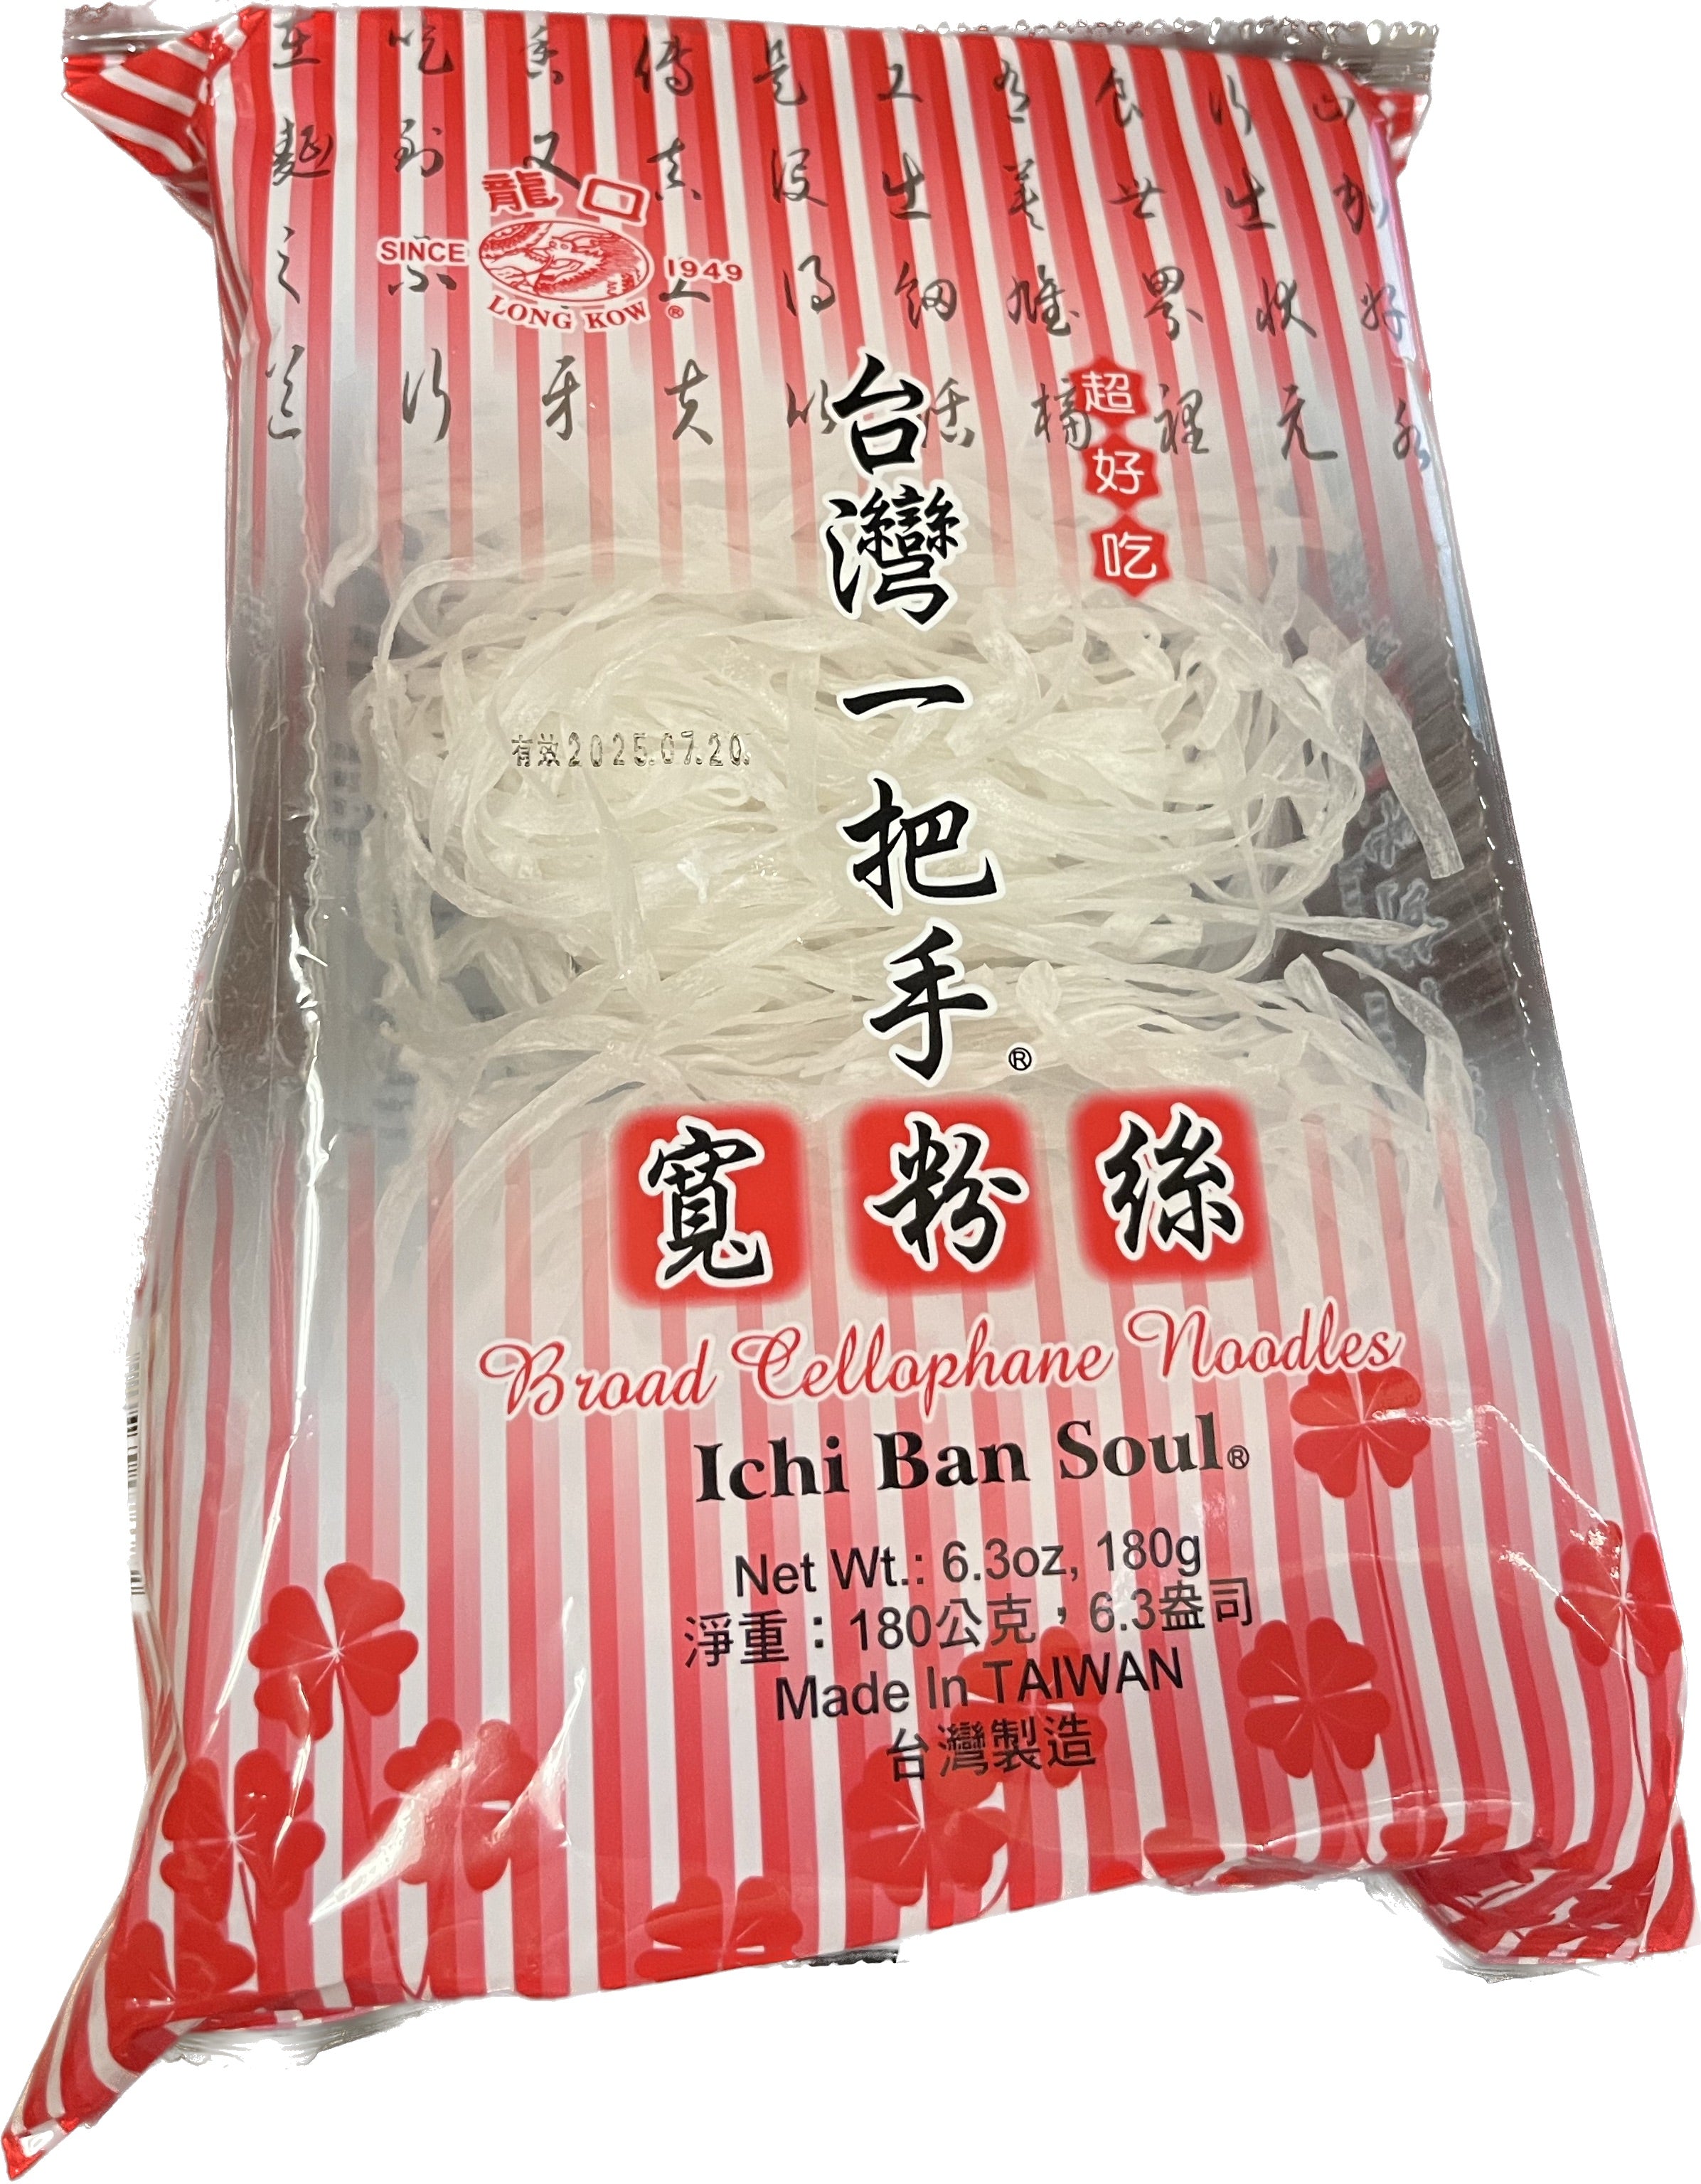 Ichi Ban Soul - Broad Cellaphane Noodles